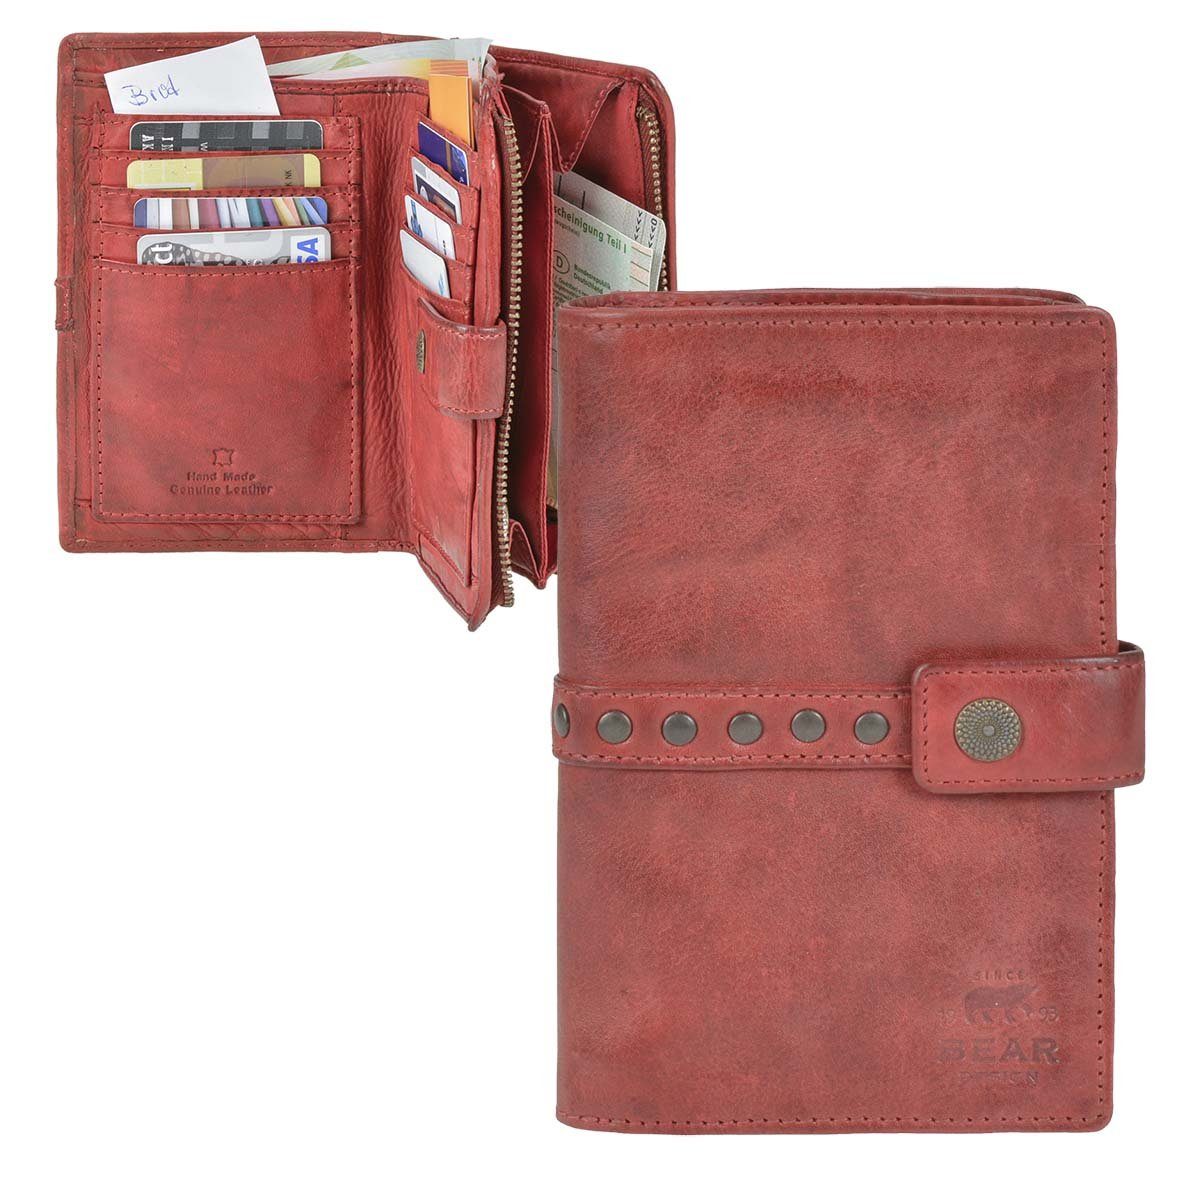 Bear Design Geldbörse "Sanne" Cow Lavato Leder, Damenbörse, Portemonnaie, knautschiges Leder in rot, 8 Kartenfächer